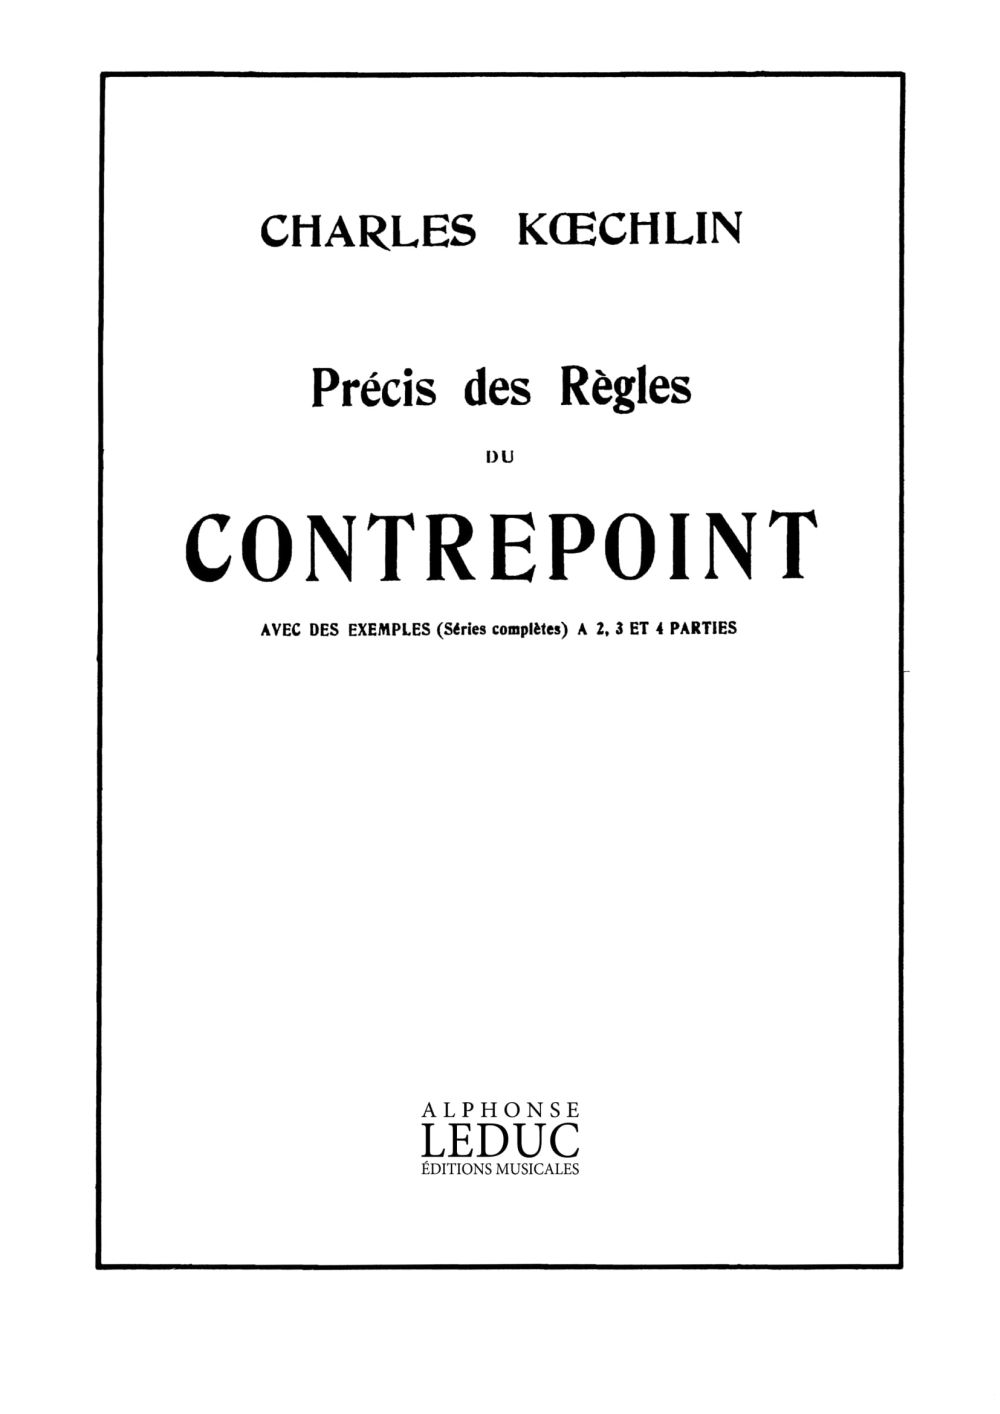 Charles Koechlin: Prcis des Rgles du Contrepoint